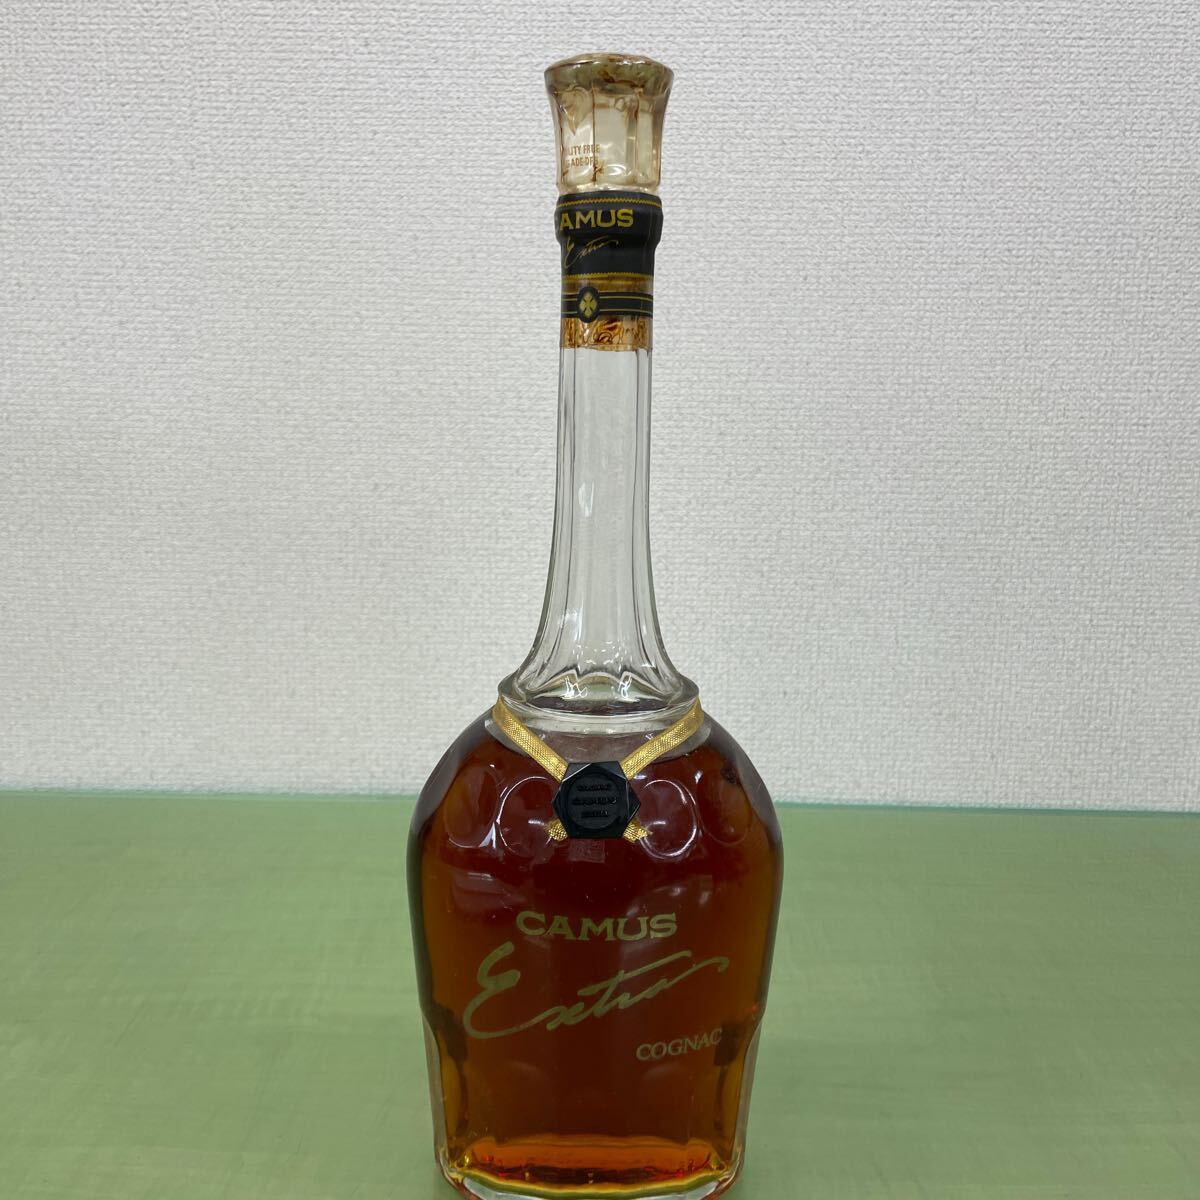 ◎ CAMUS Extra COGNAC 700ml long neck bottles古酒・未開栓品 カミュ エクストラ コニャック ブランデーの画像1